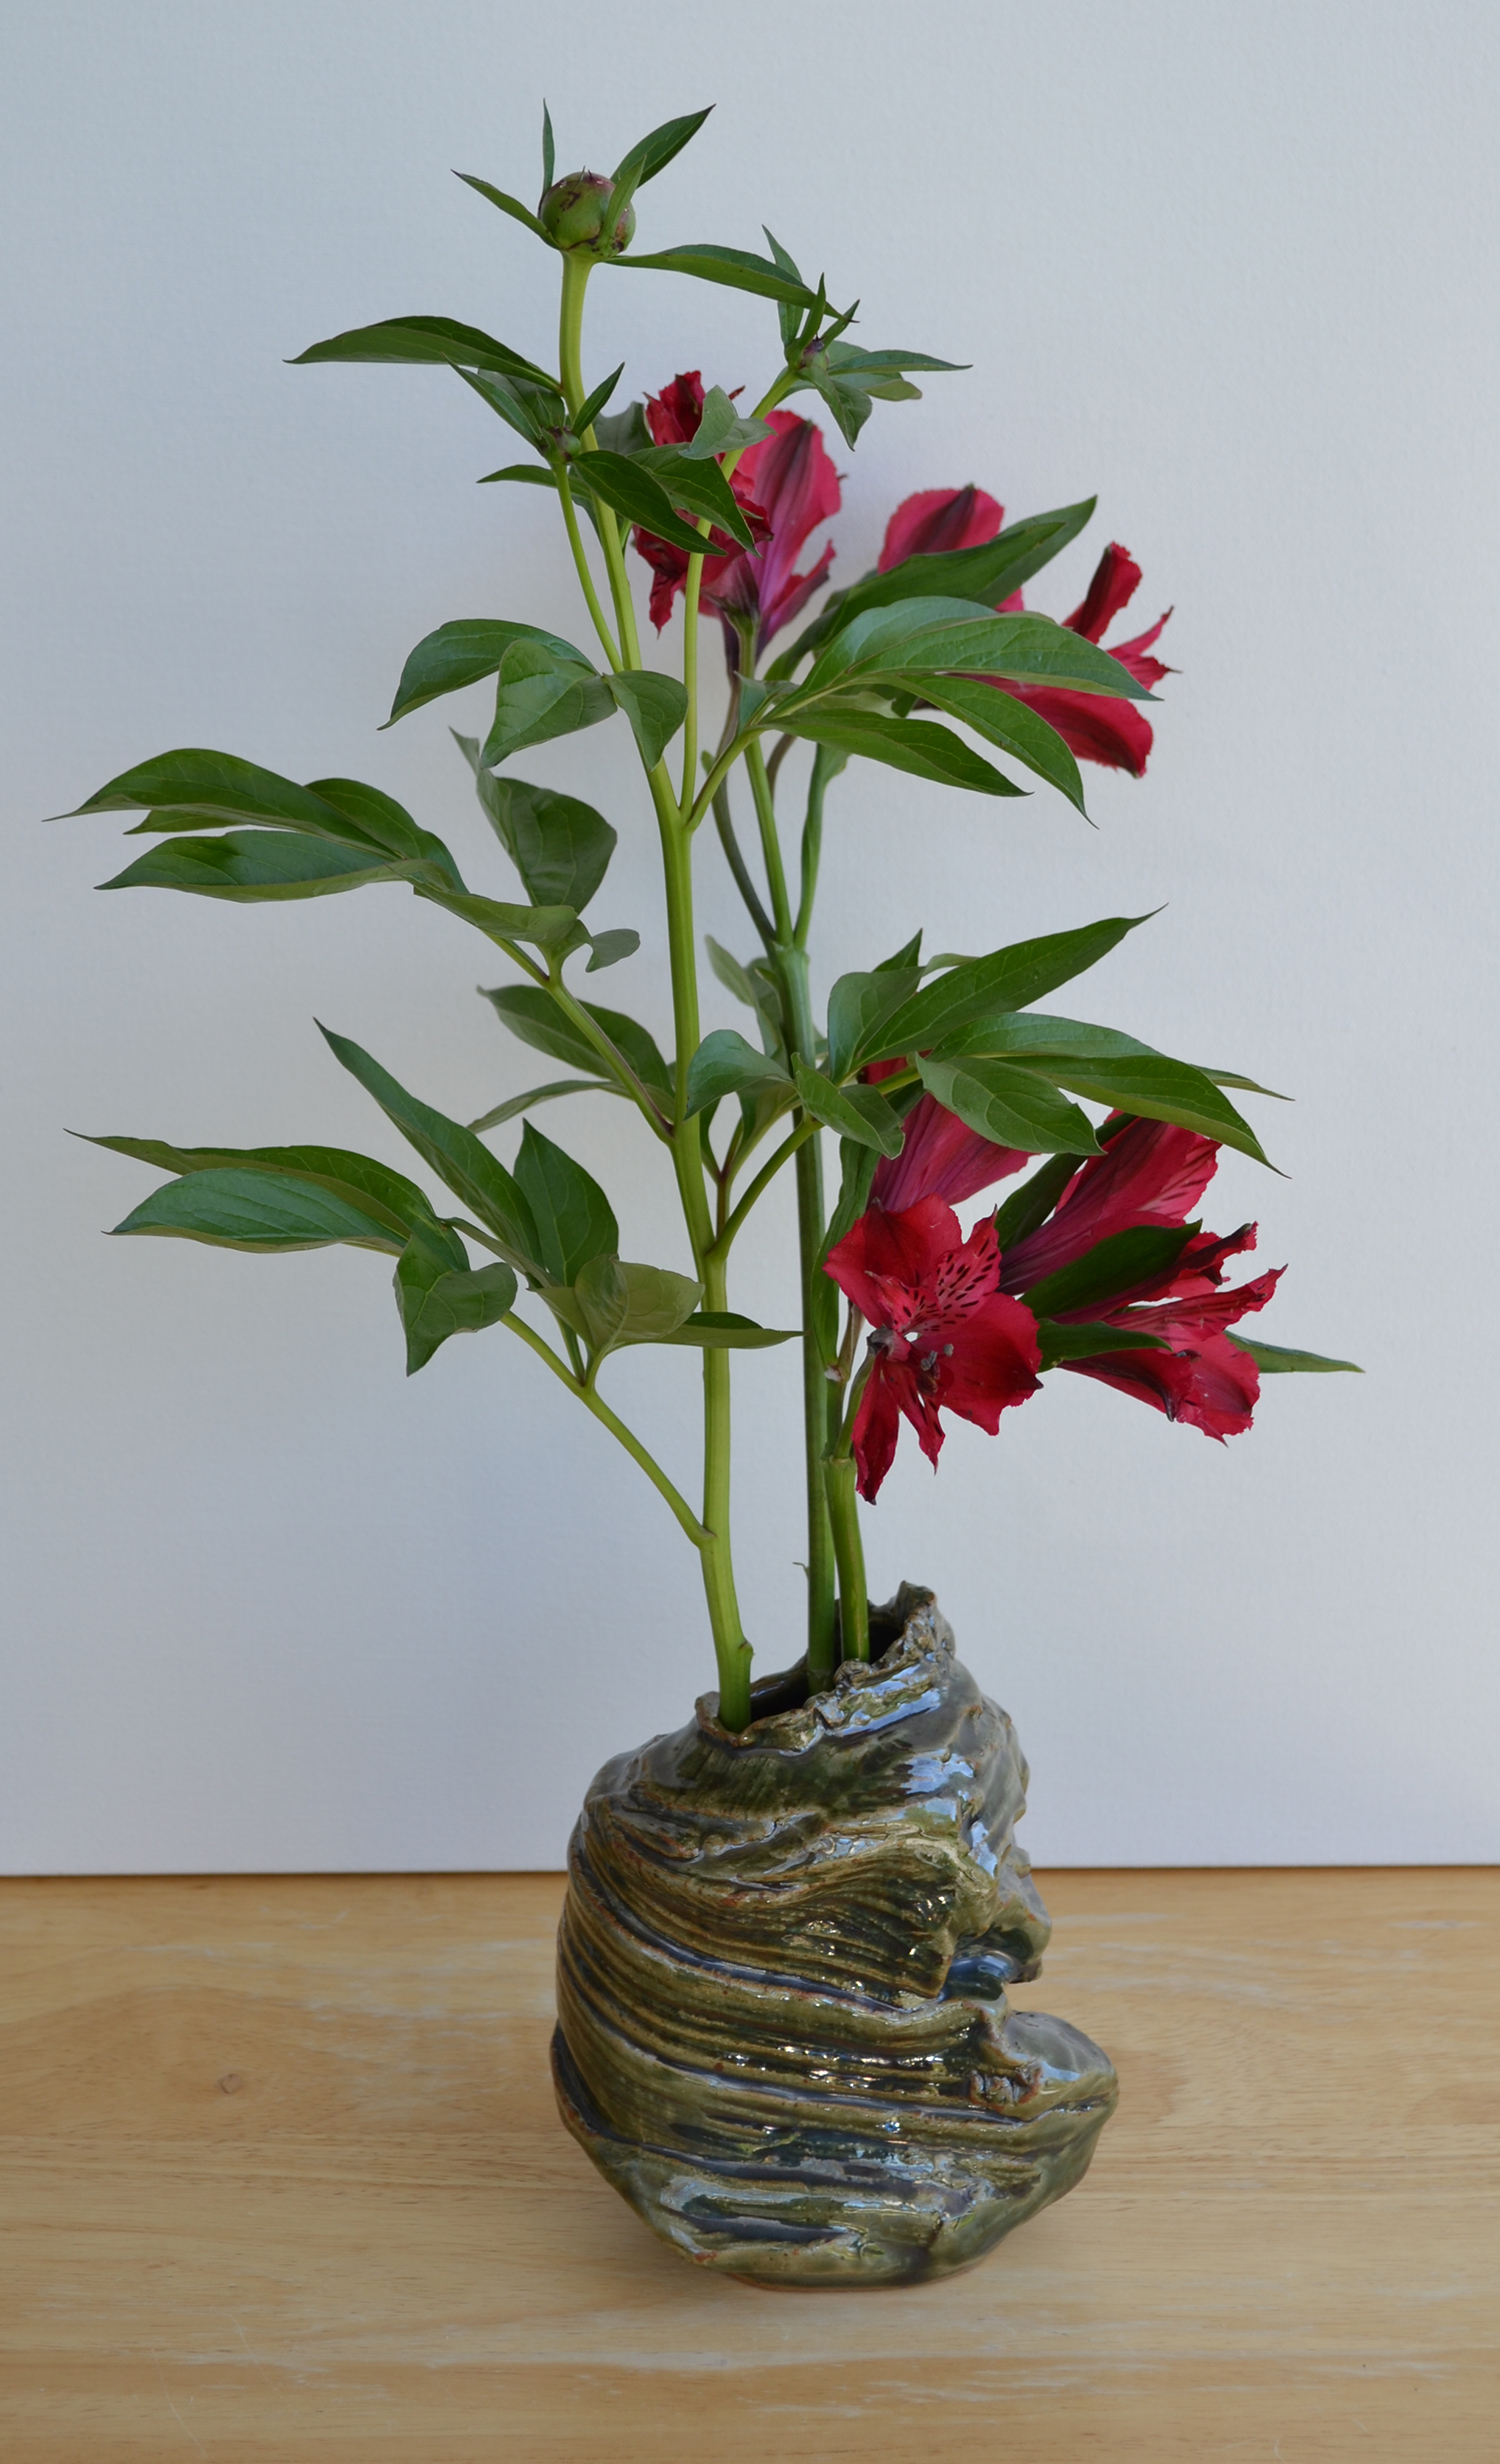 Swirl Vessel with Flower Arrangement